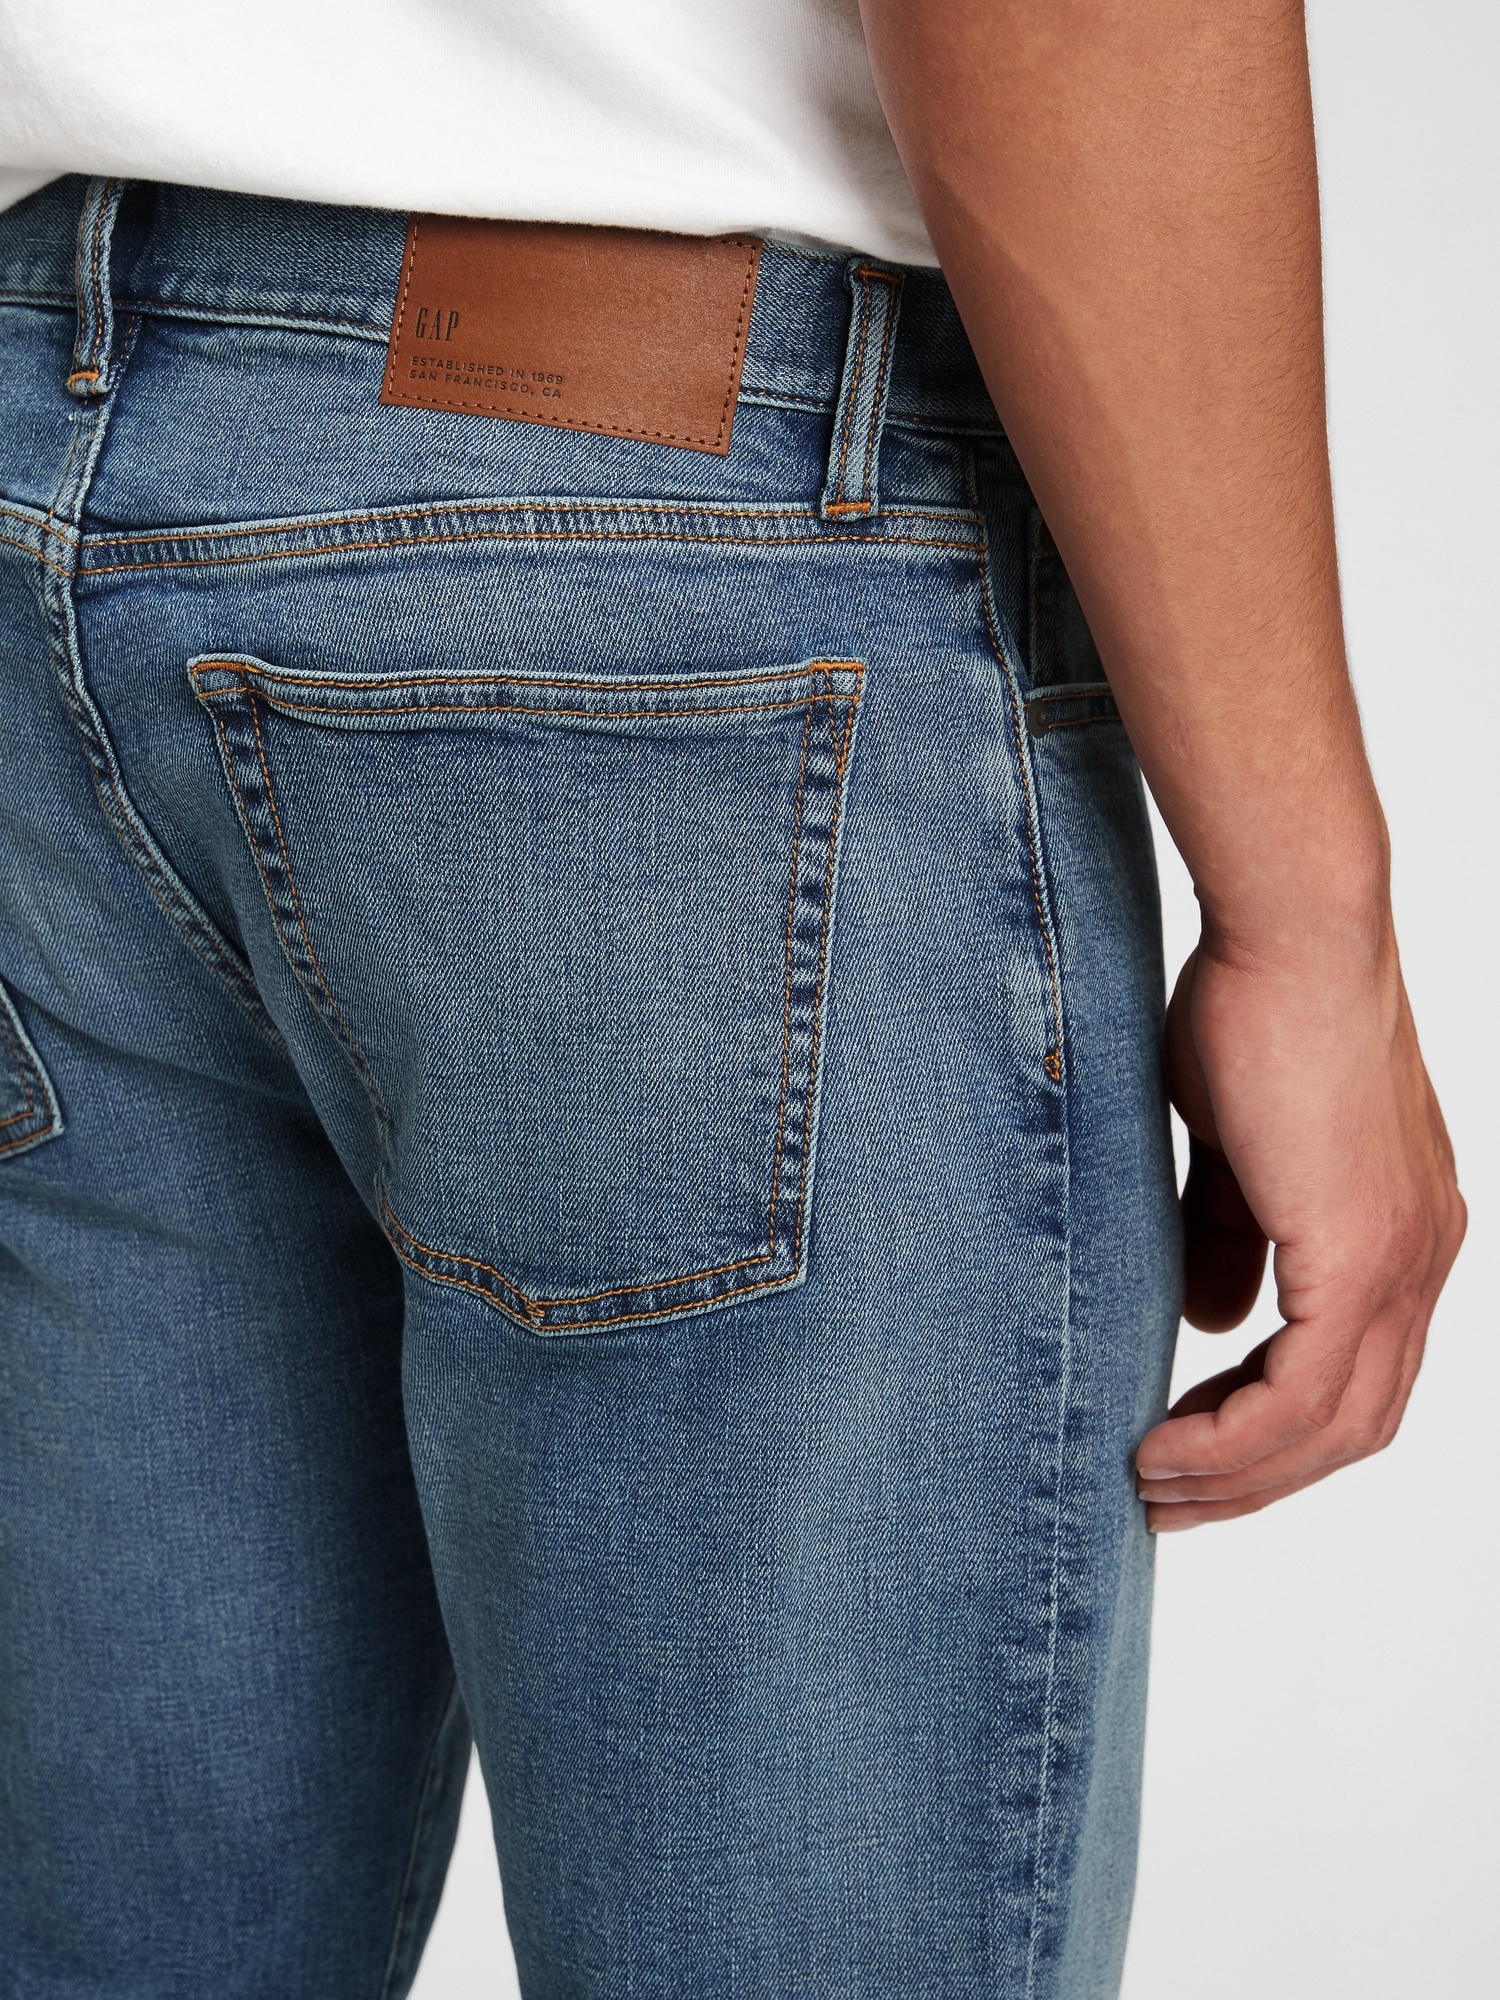 Mens Gap Slim Straight Stretch GapFlex Washwell Jeans in Resin Rinse 34 X  32.5 